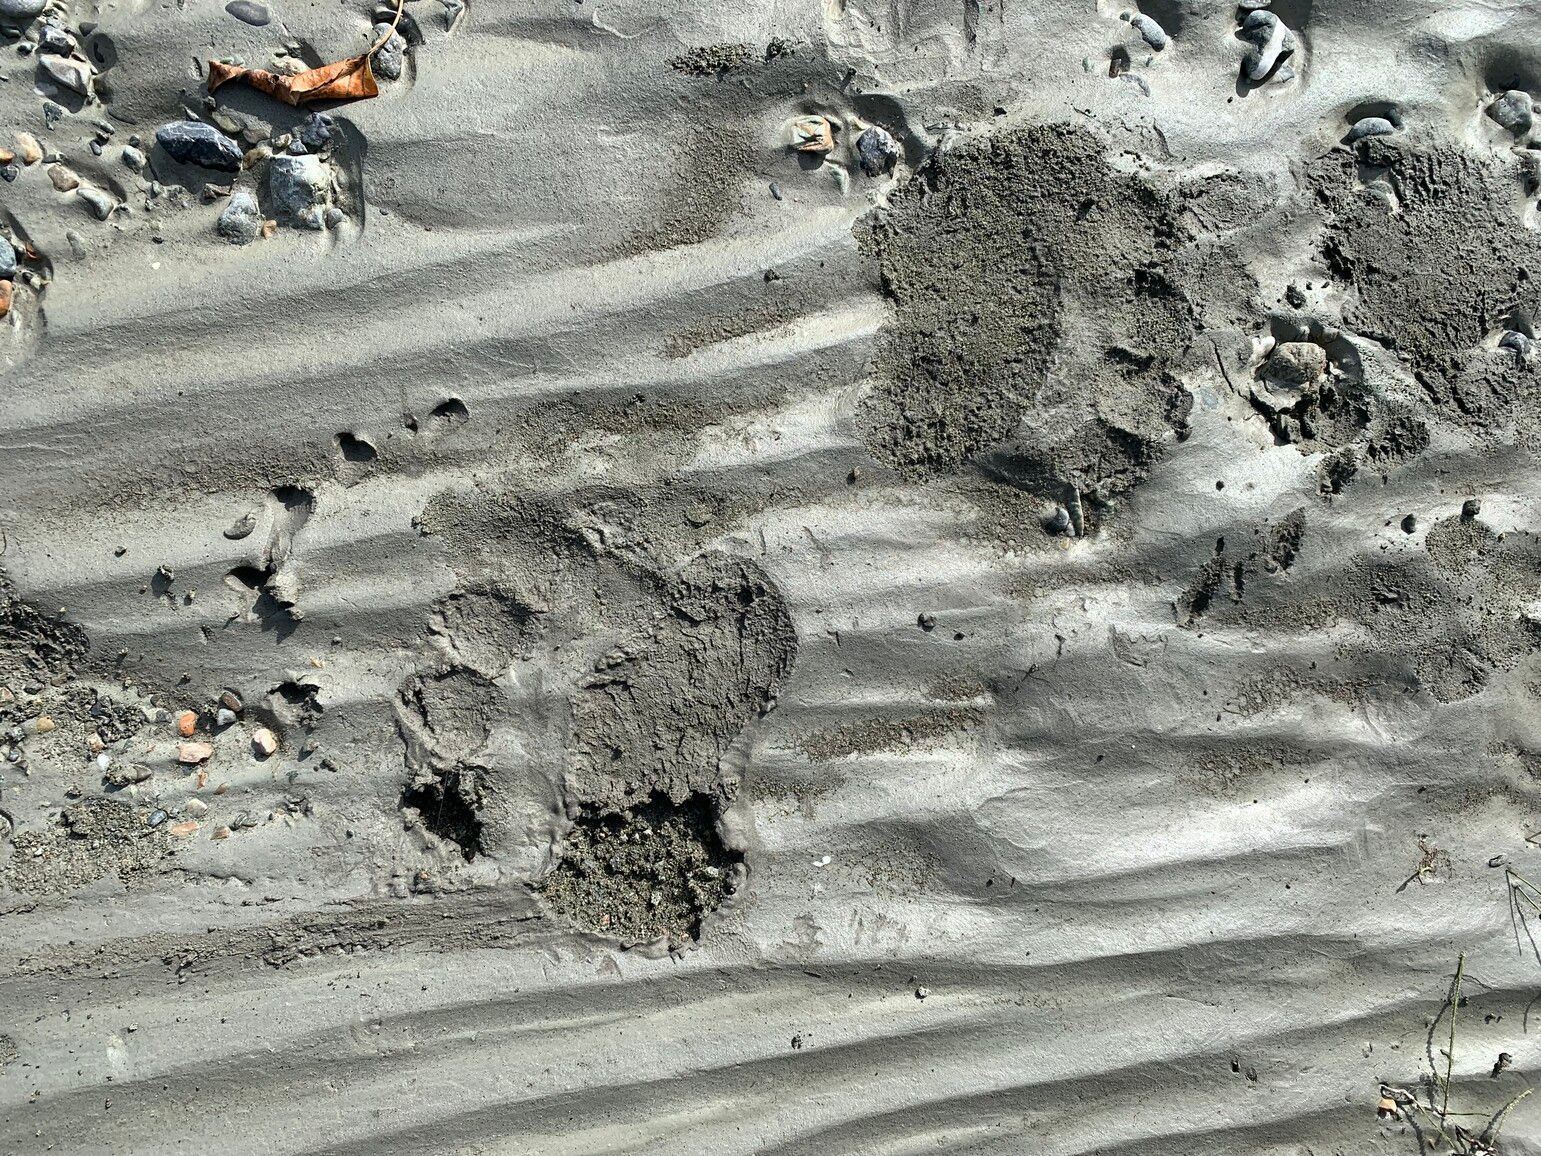 Grizzle bear prints in the silt from glaciers around the Tatshenshini River in Tatshenshini-Alsek Park.